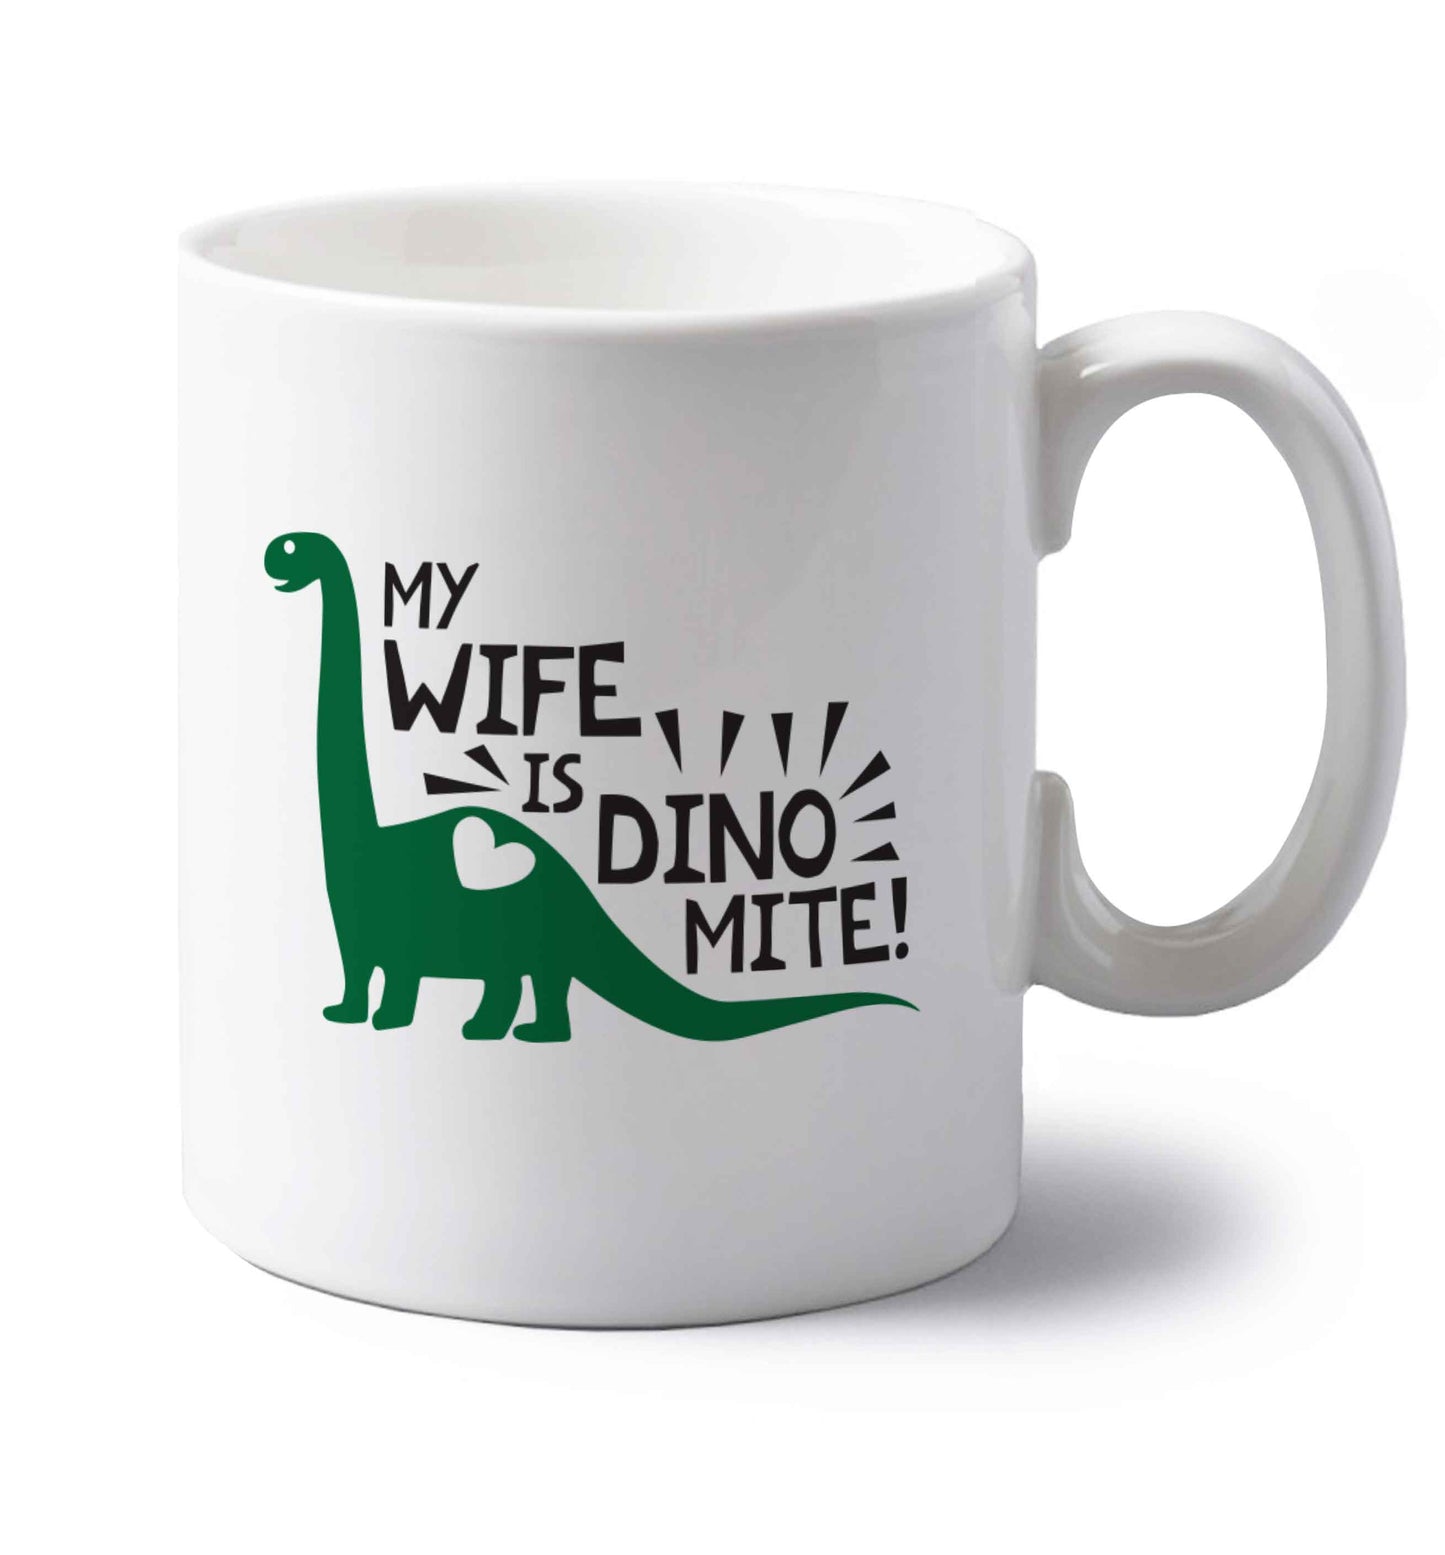 My wife is dinomite! left handed white ceramic mug 